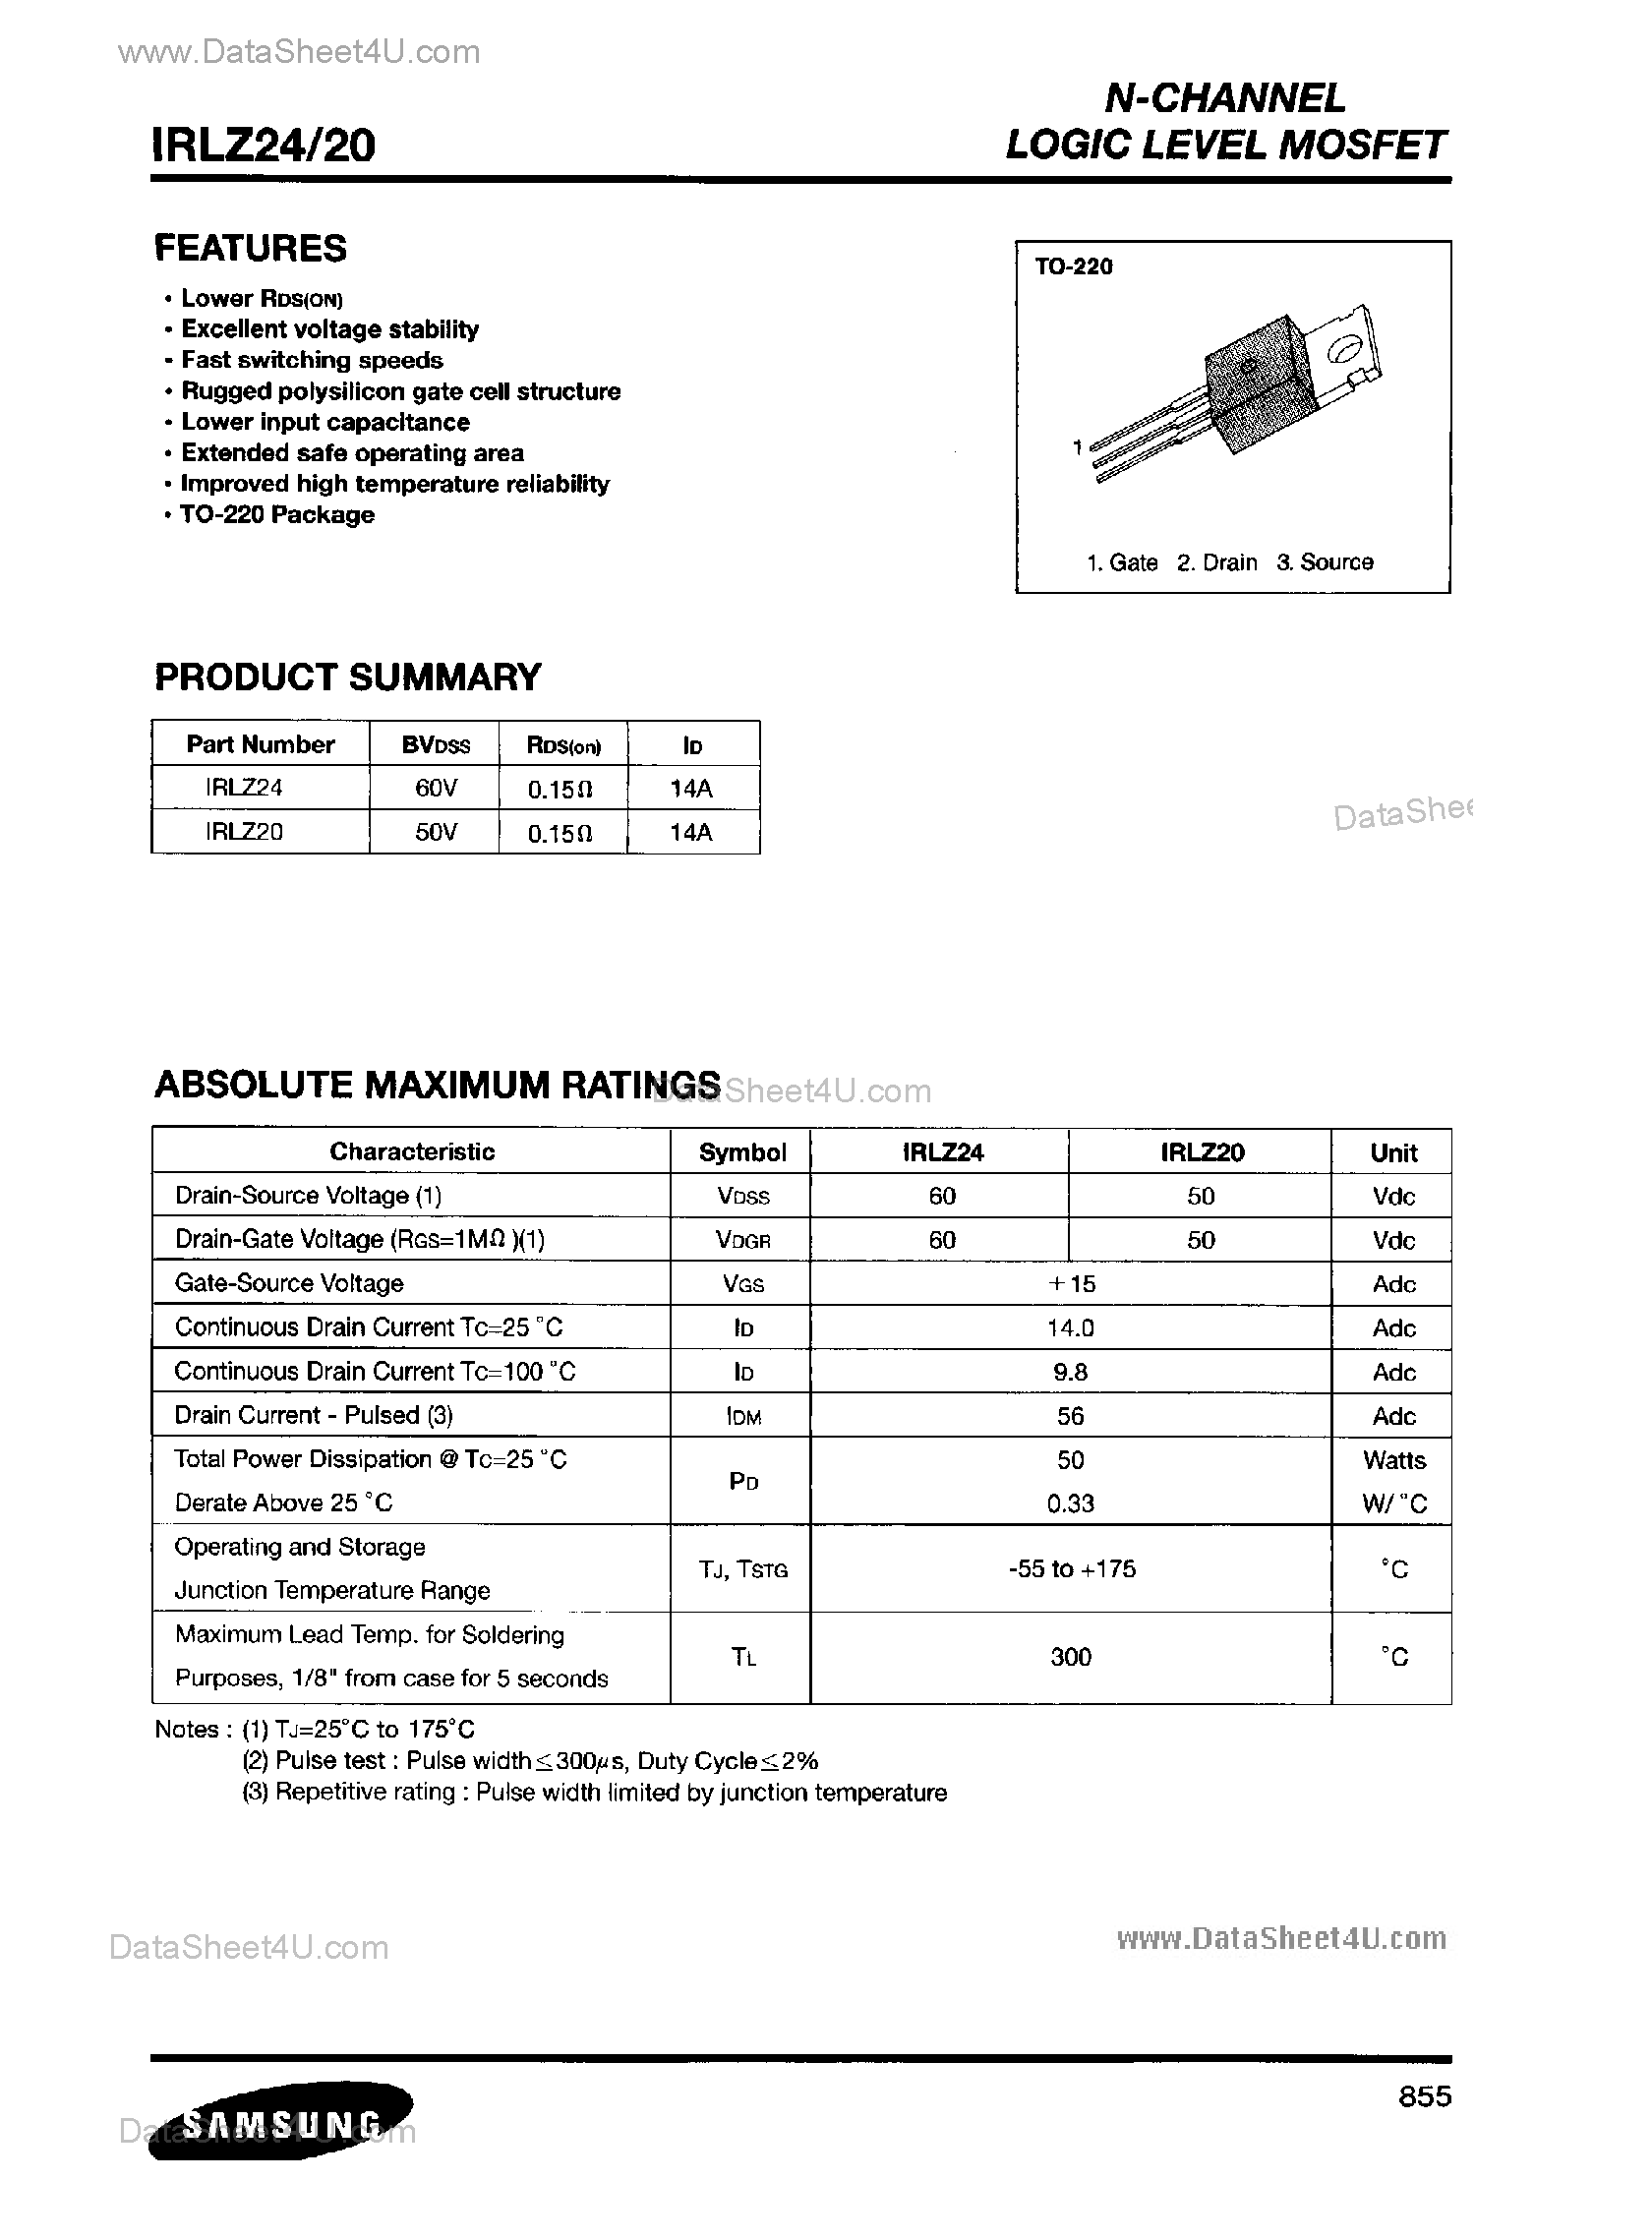 Datasheet IRLZ20 - (IRLZ20 / IRLZ24) N-Channel Logic Level MOSFET page 1